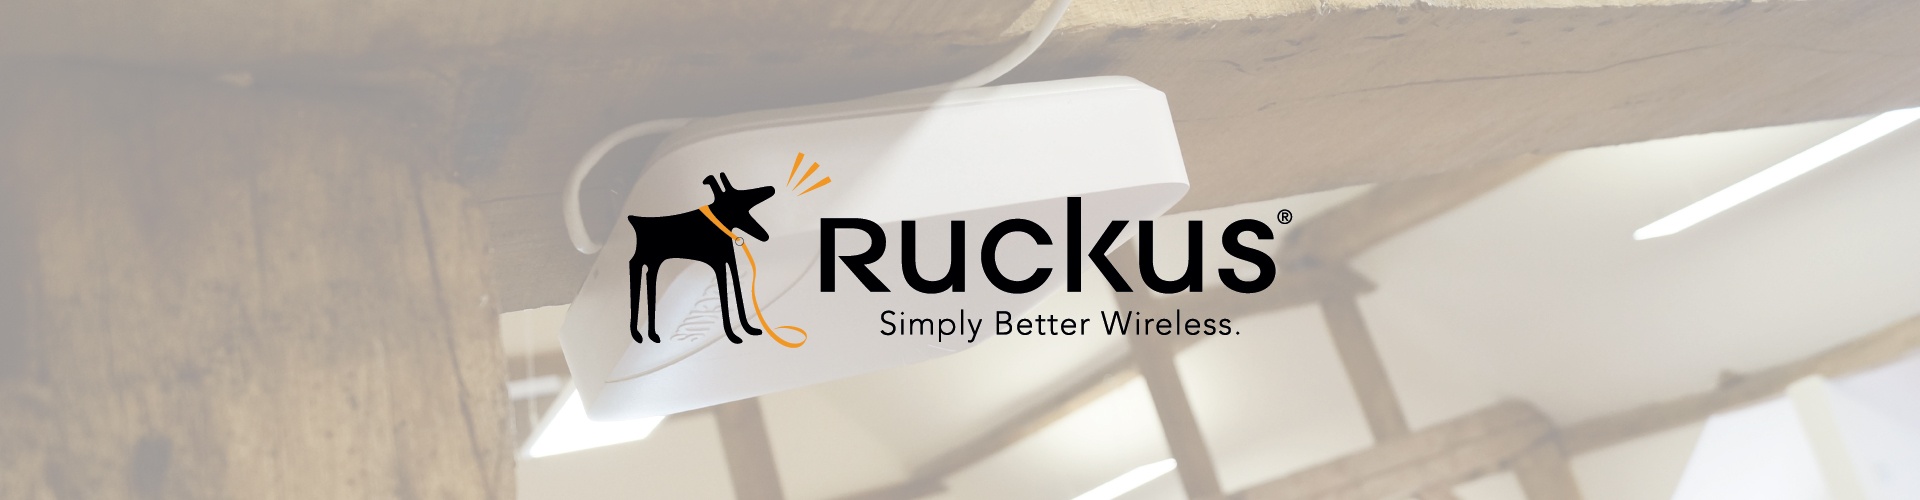 Ruckus-wifi-facil-de-instalar.jpg